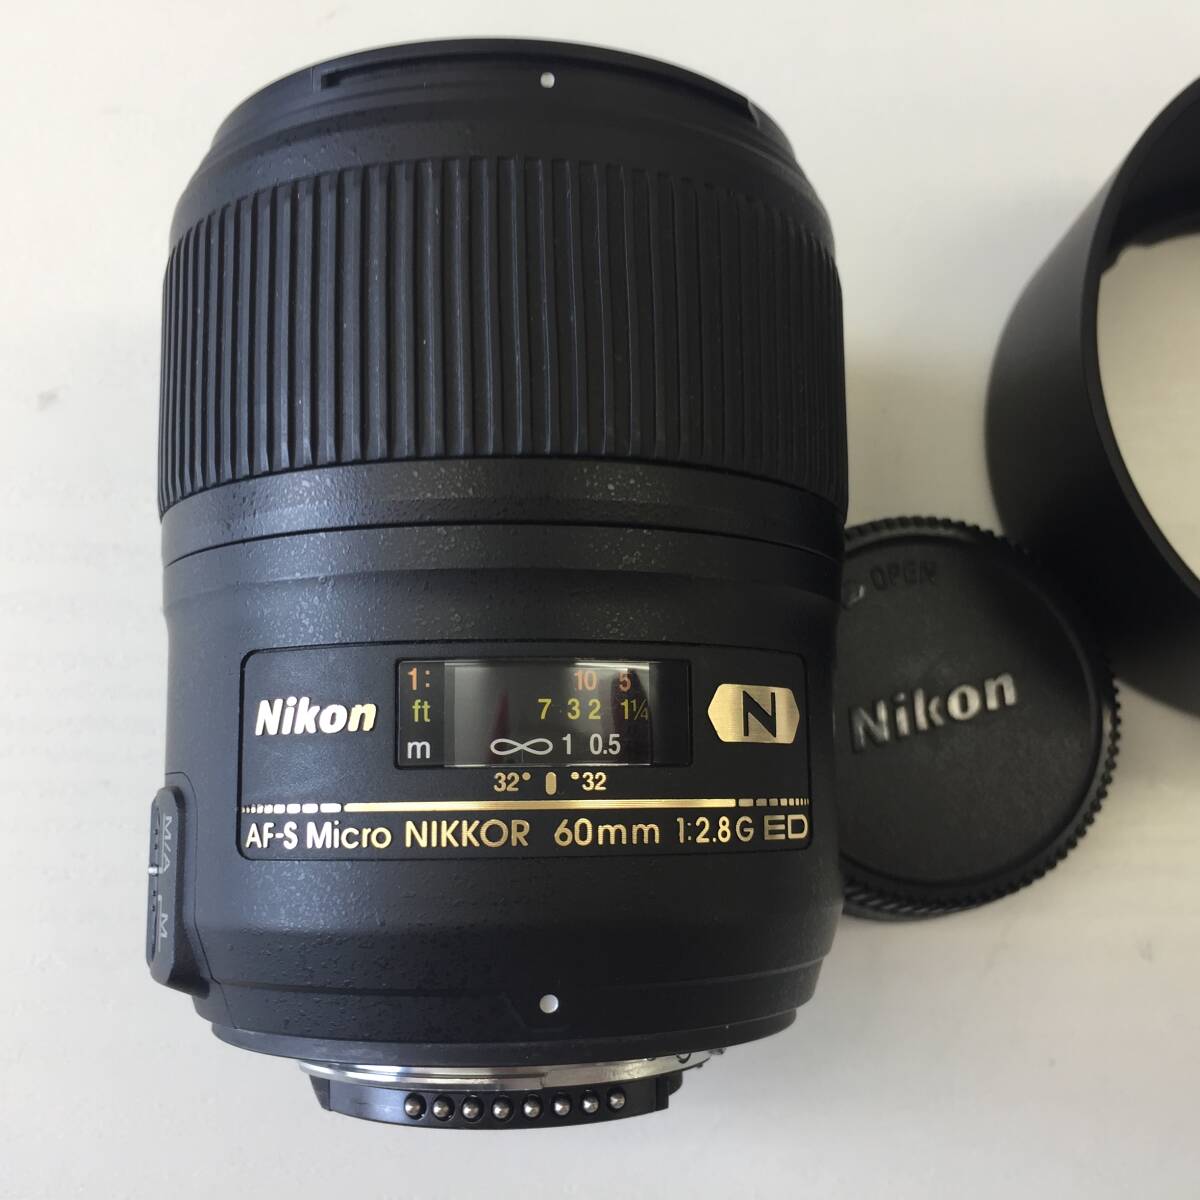 Nikon ニコン レンズ AF-S Micro NIKKOR 60mm F2.8G ED 動作確認済みの画像2